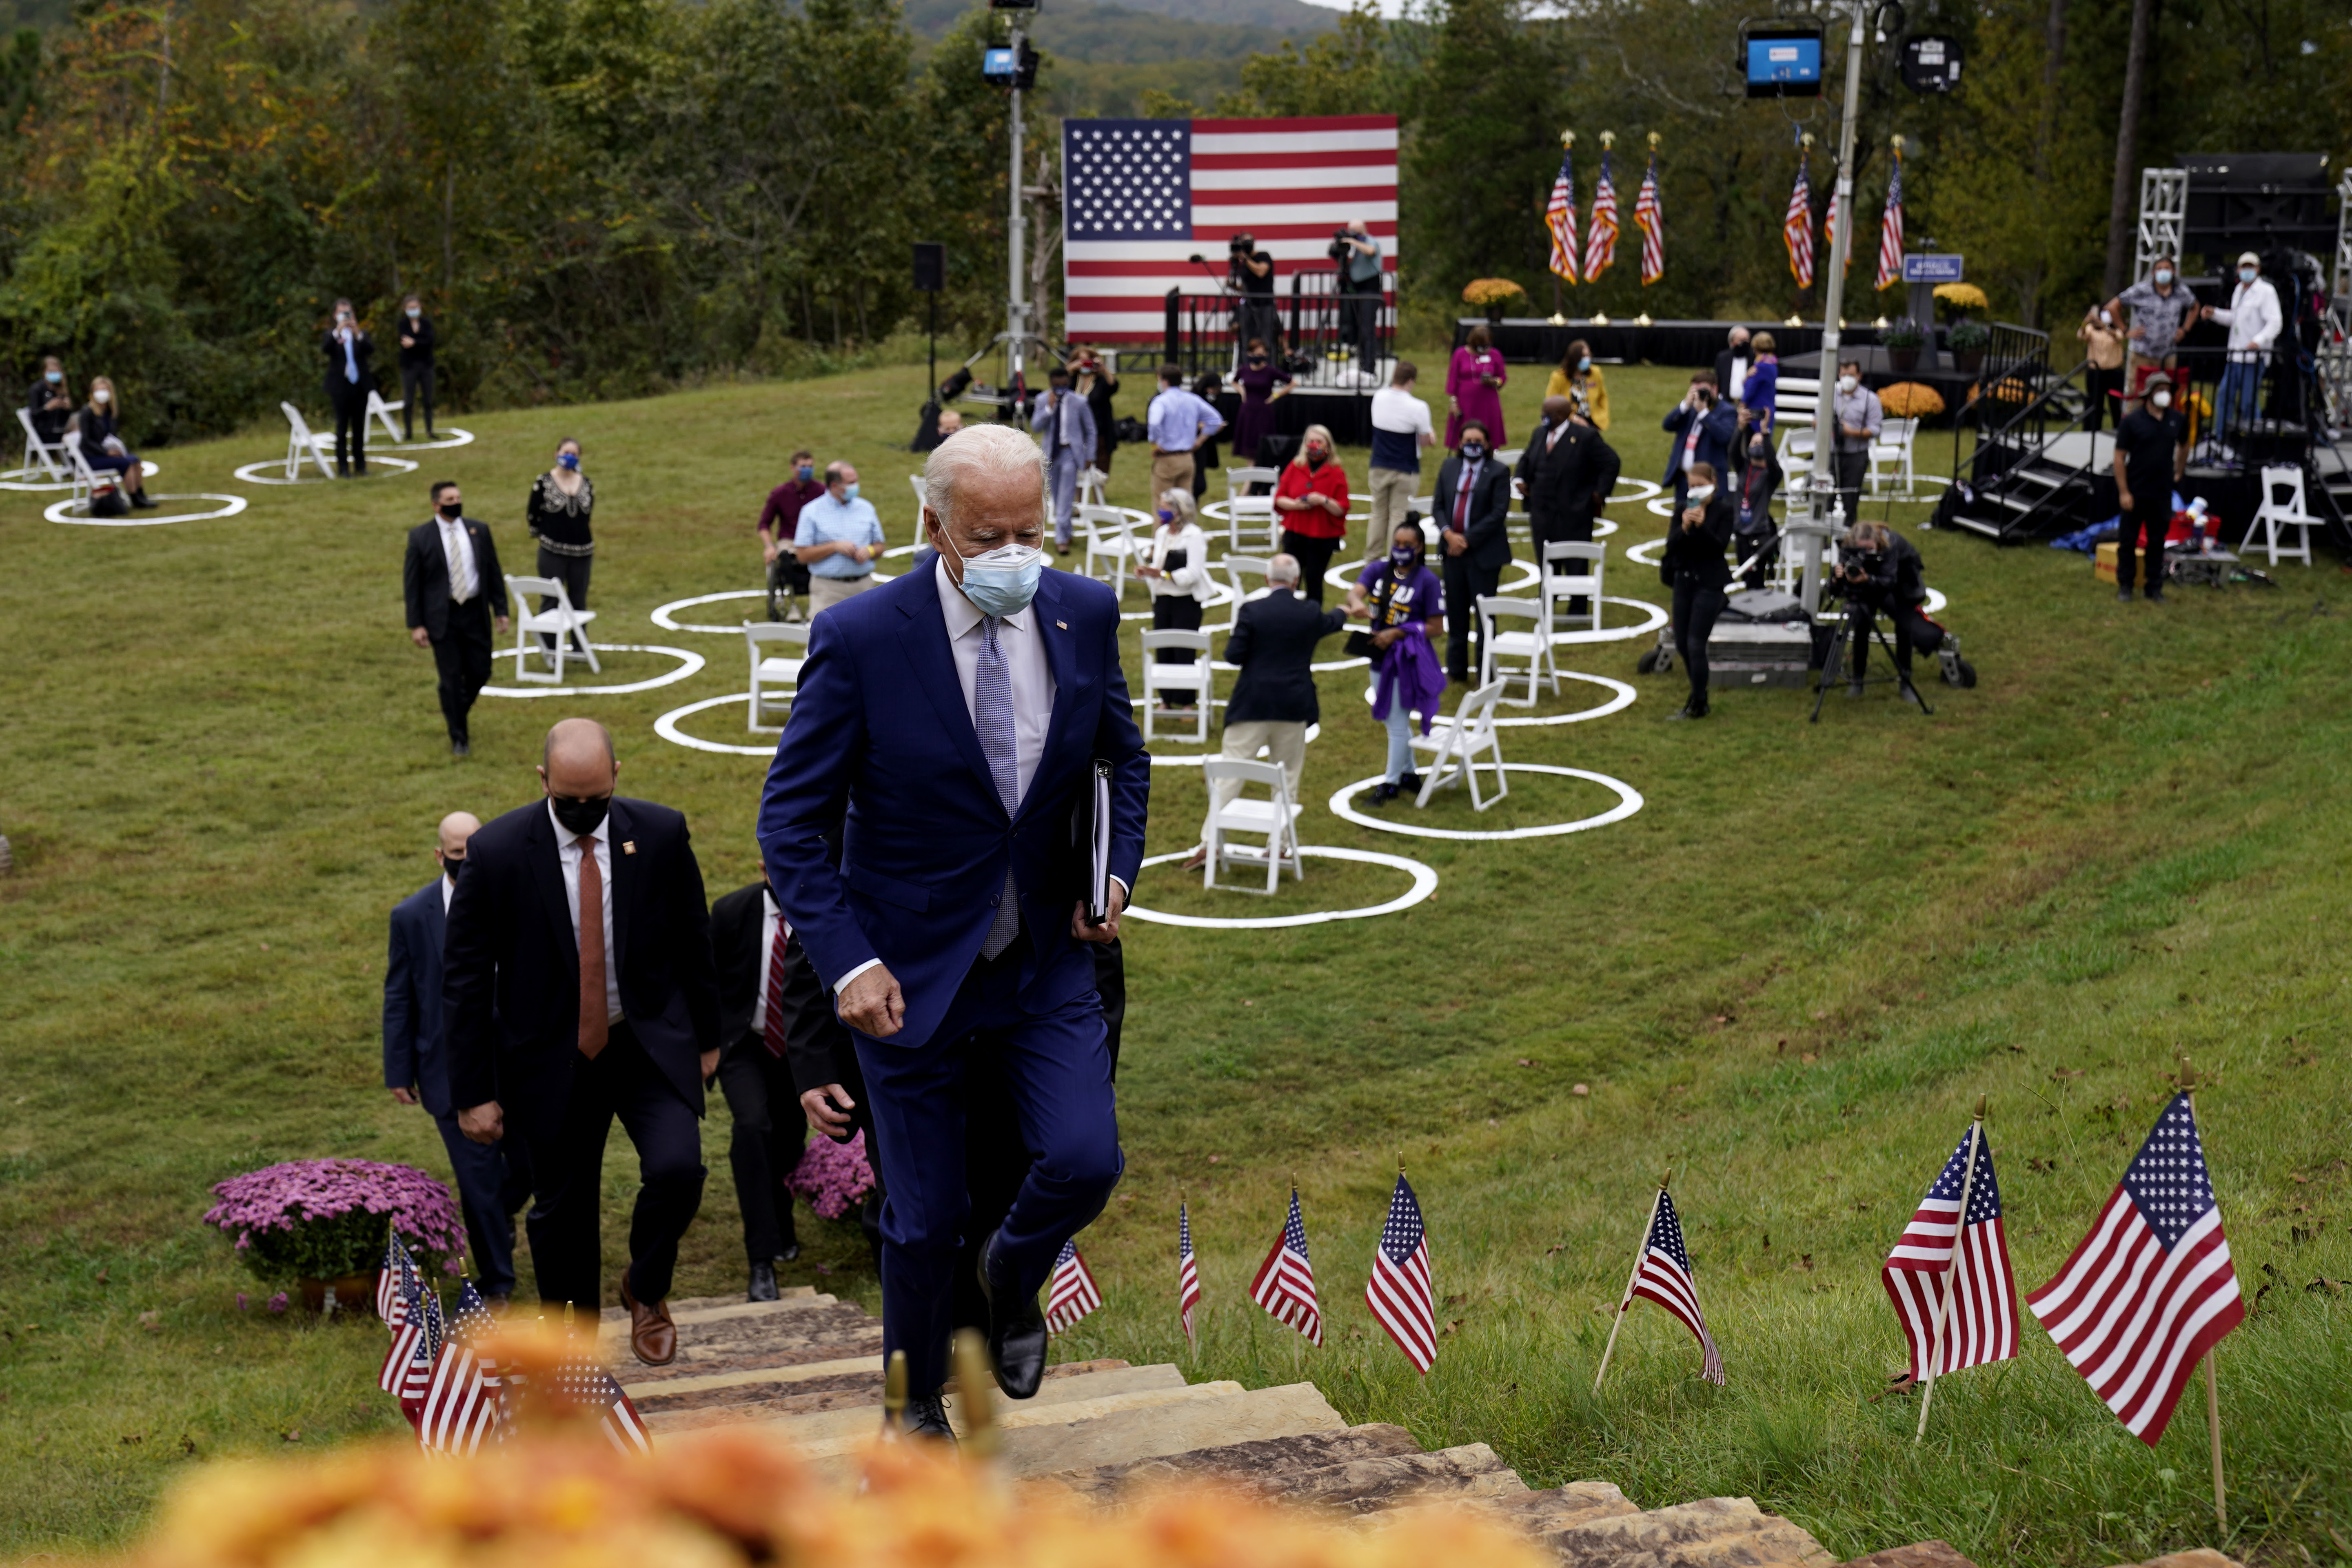 This image shows Joe Biden leaving an outdoor venue